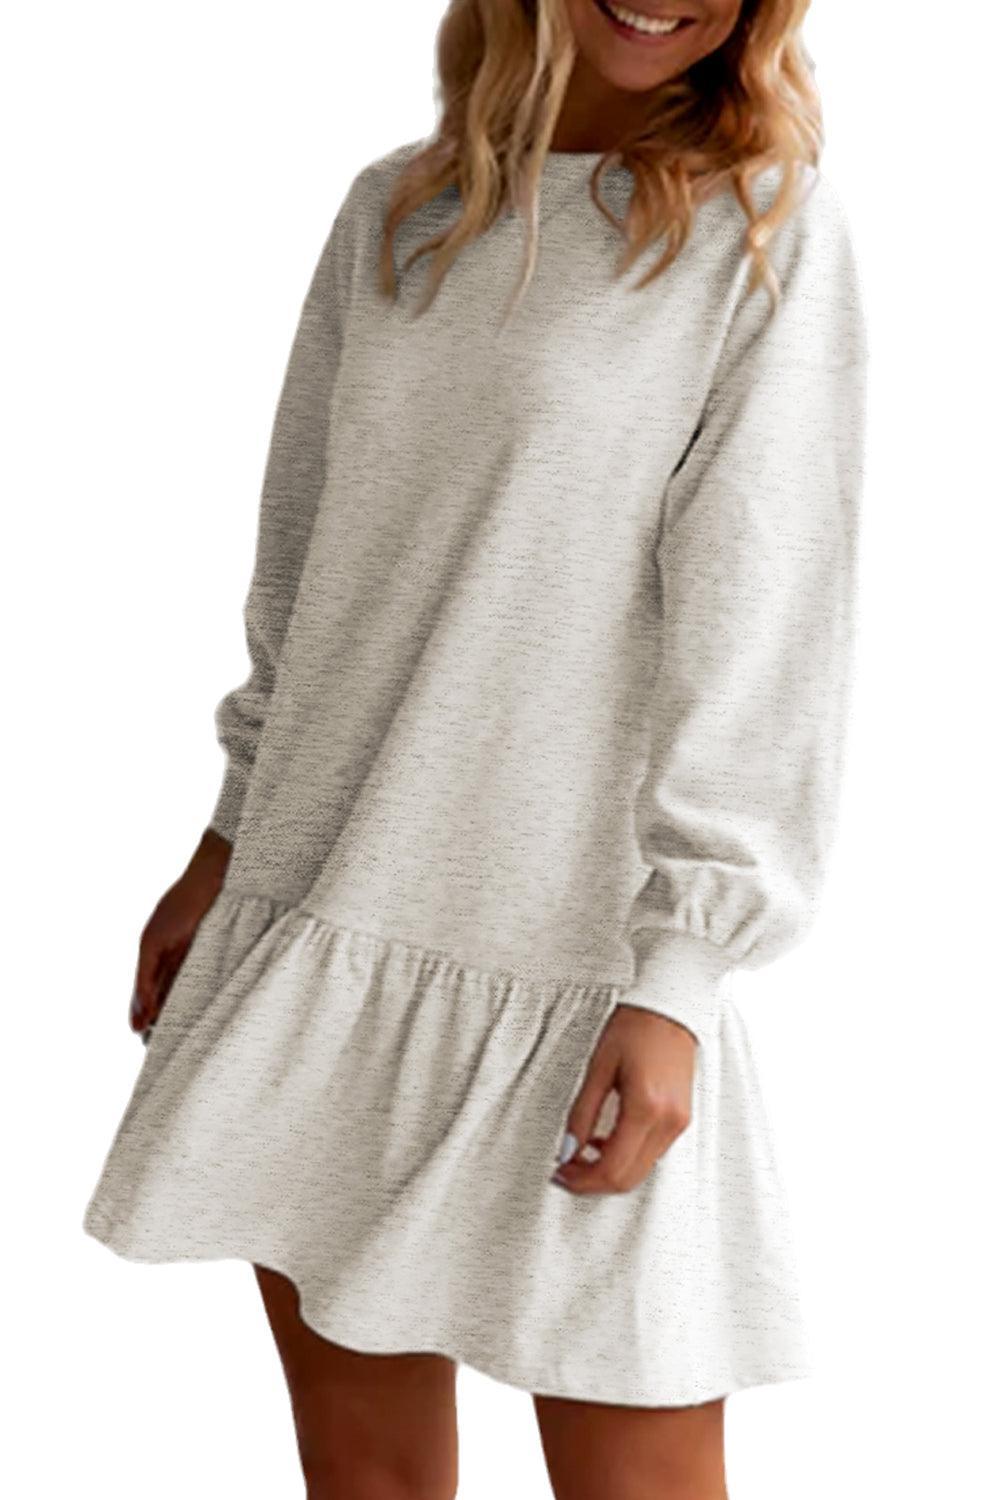 White Solid Color Ruffle Hem Mini Sweatshirt Dress - Ninonine